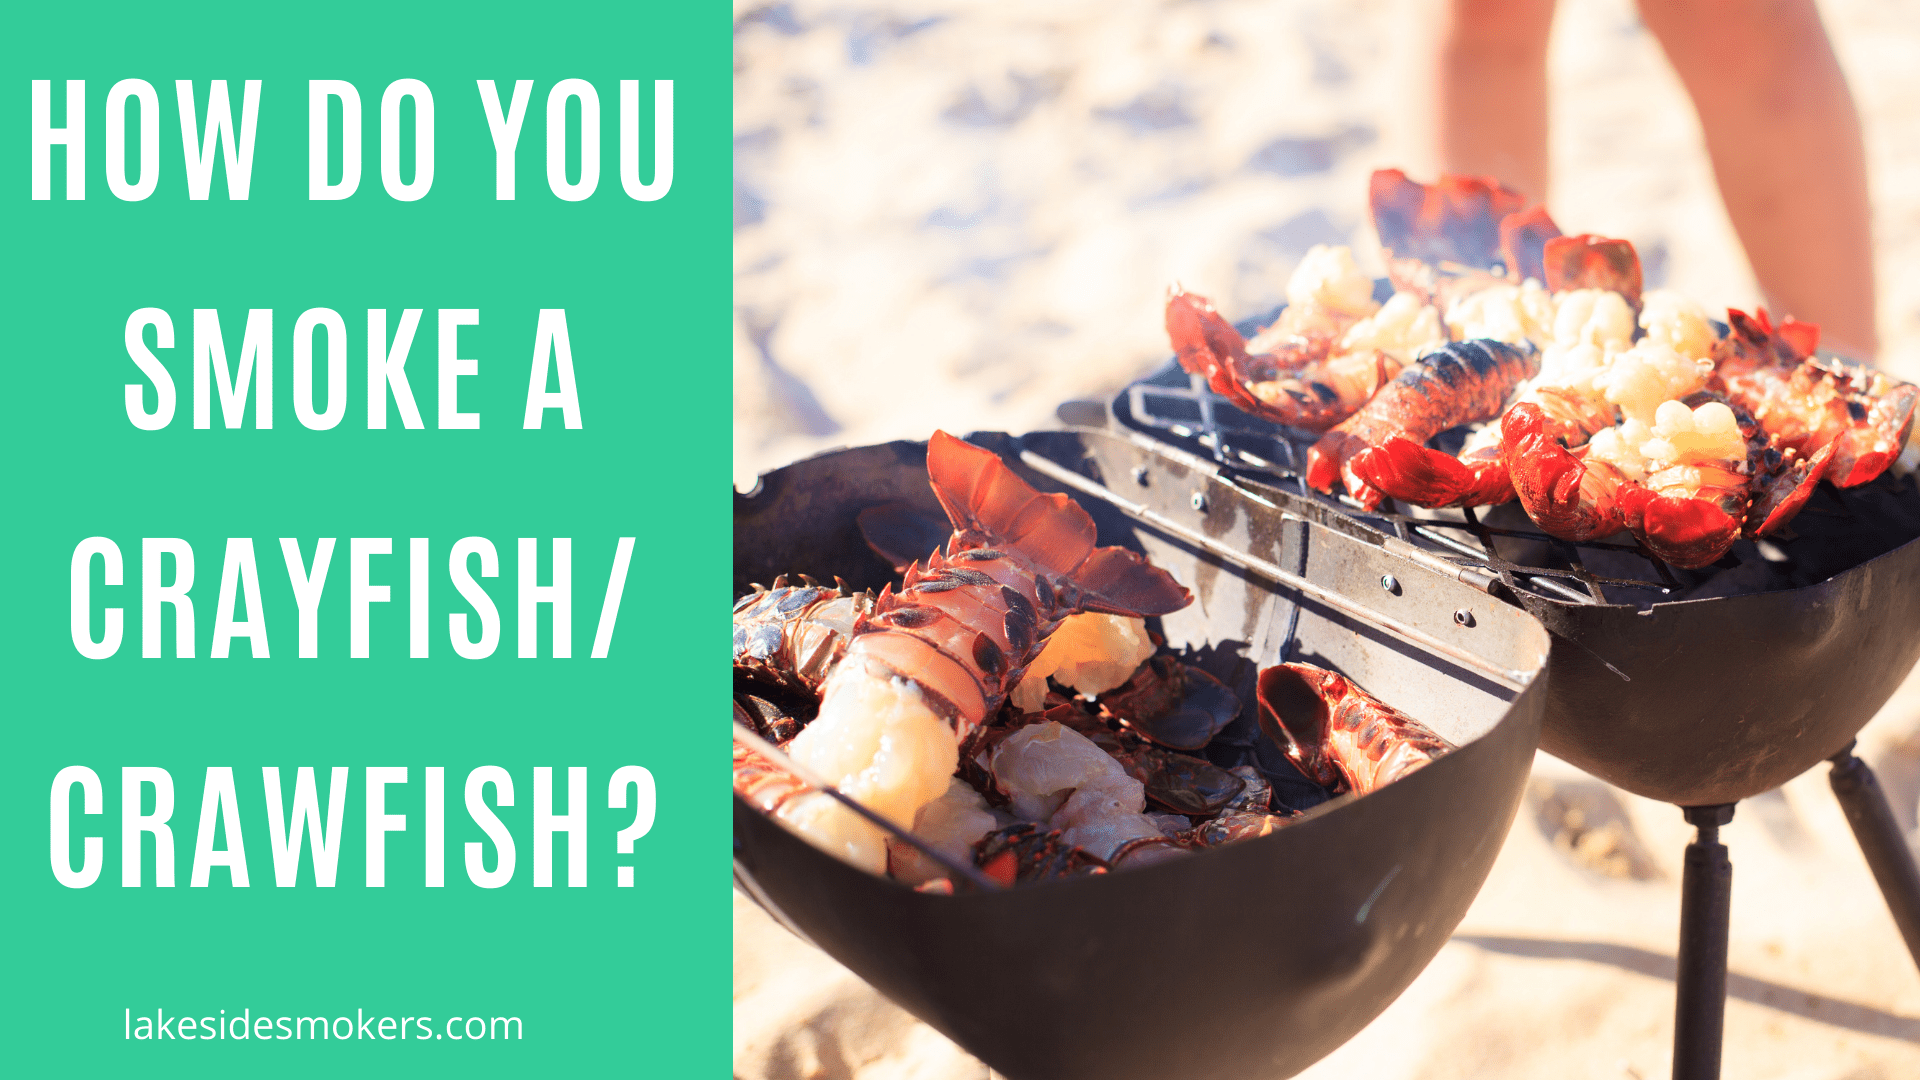 How do you smoke a crayfish/crawfish? Full recipe + gear explained